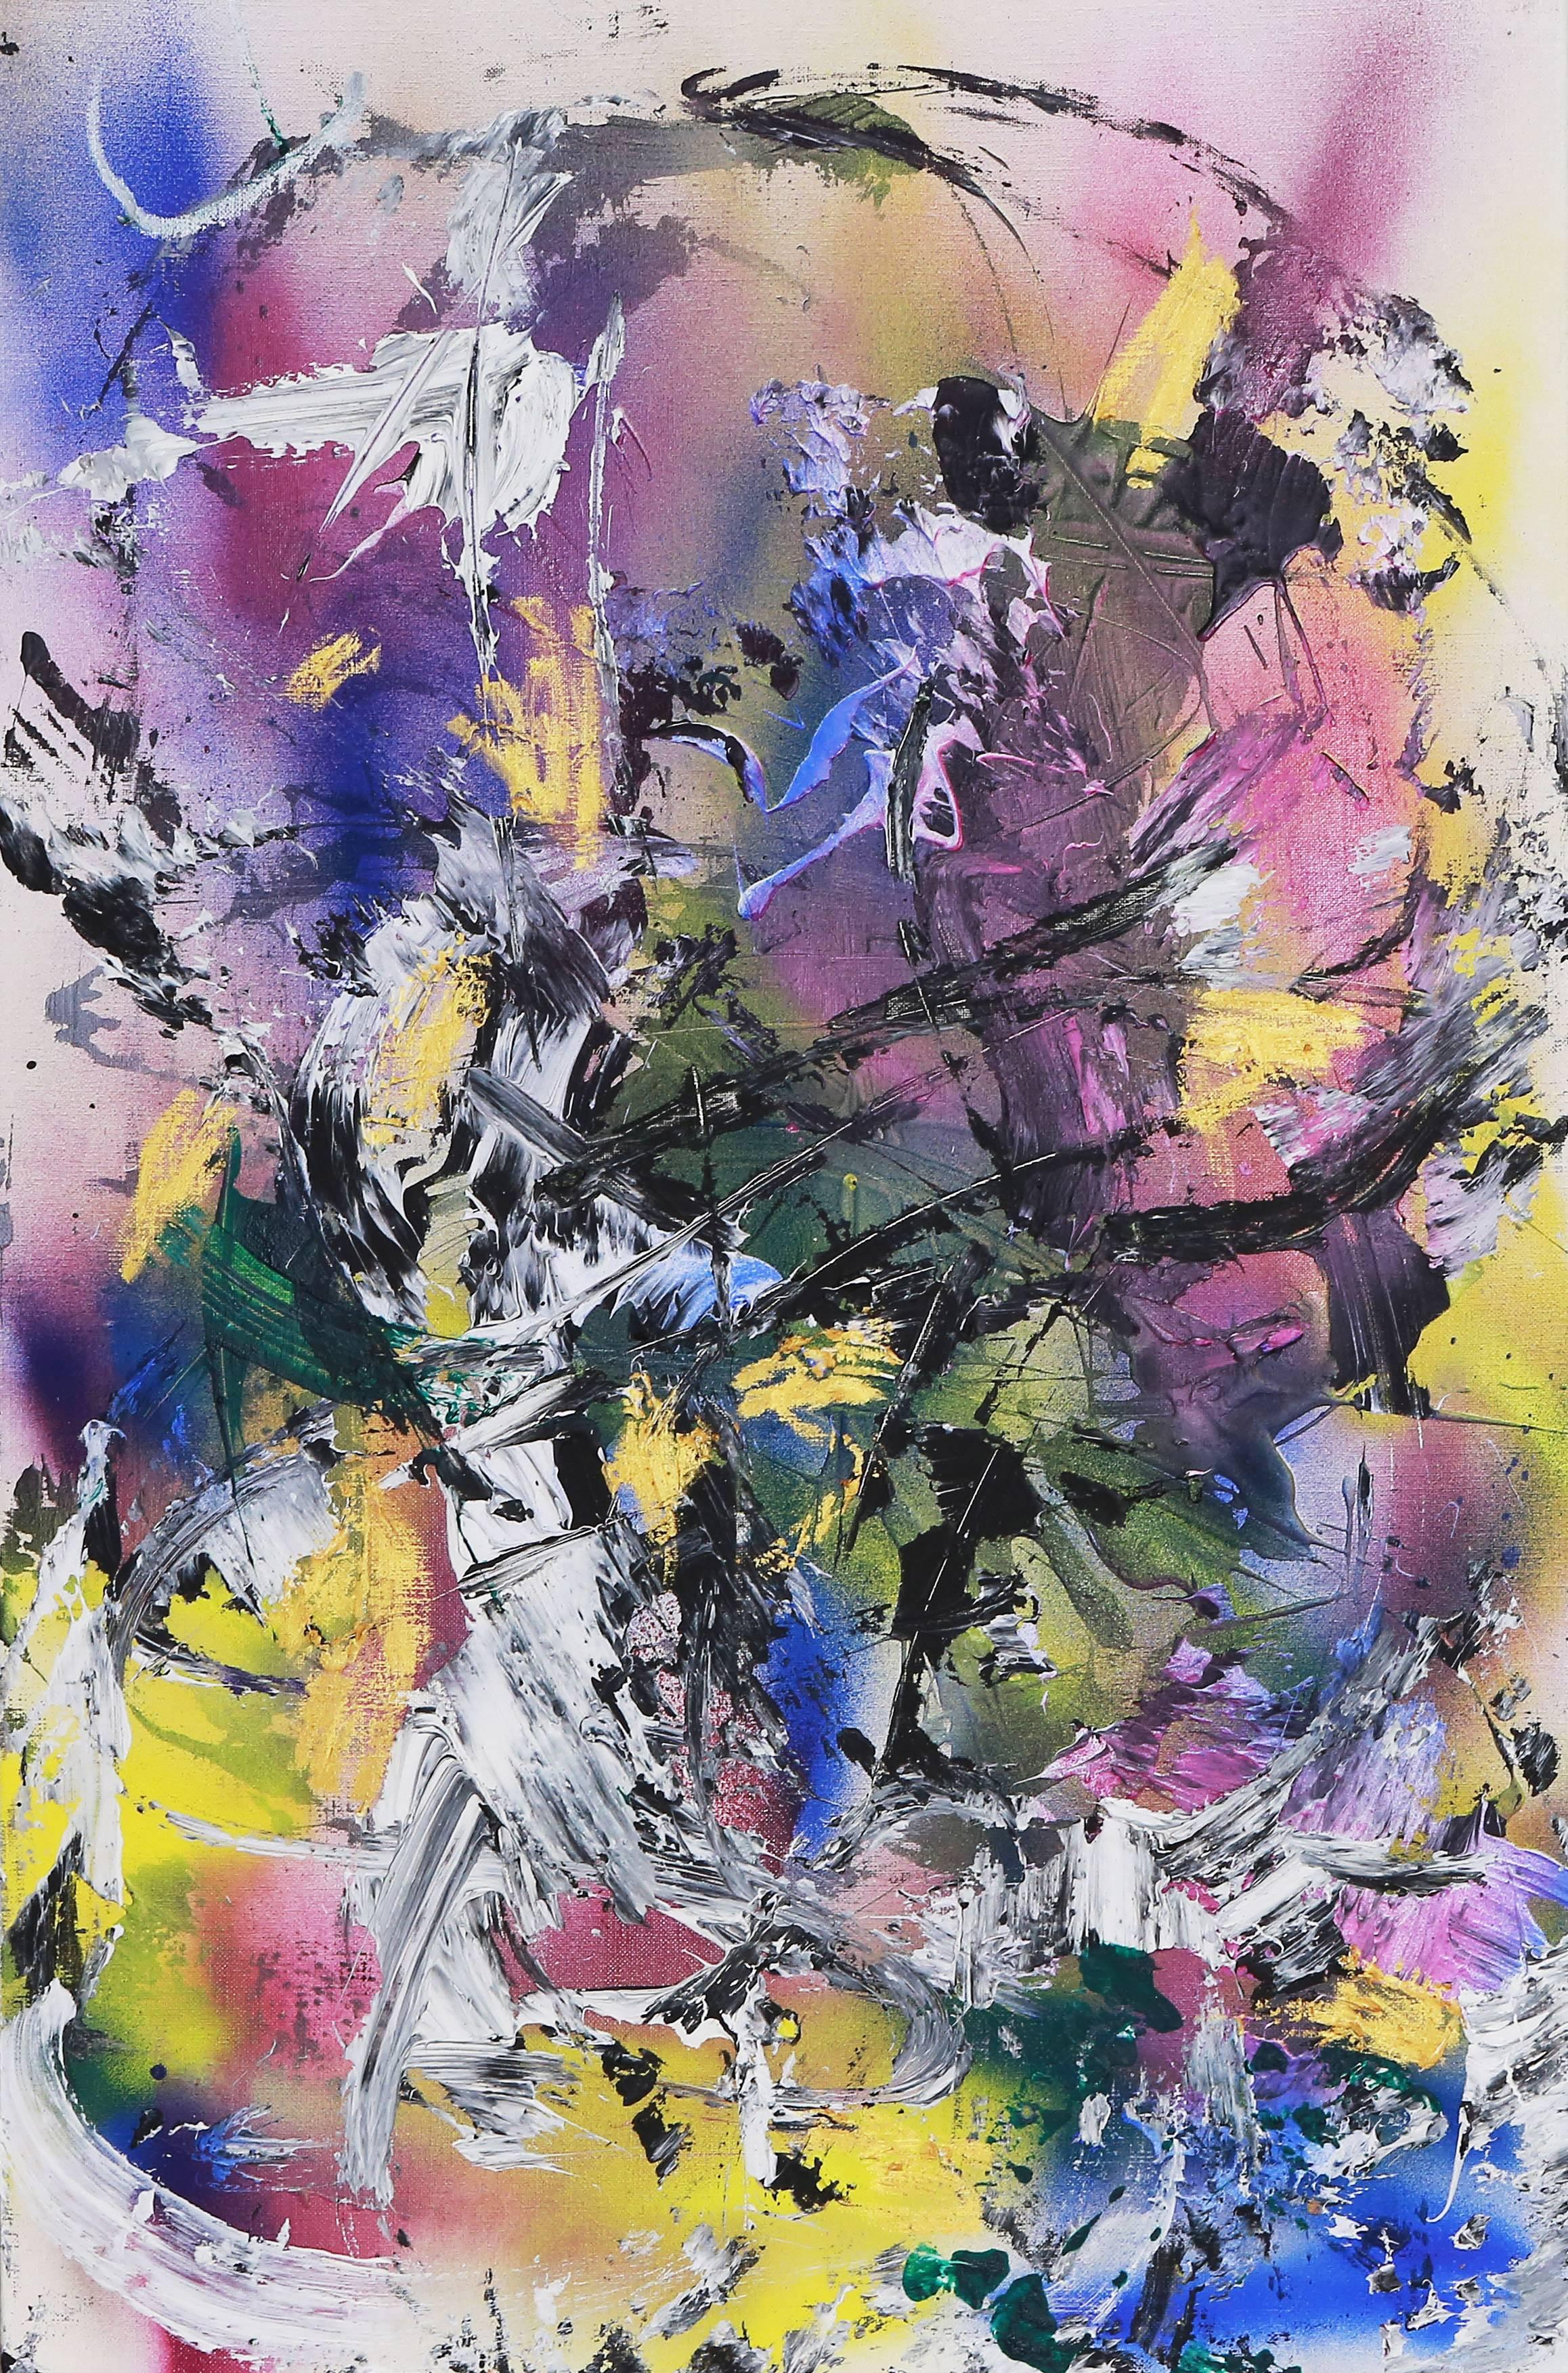 N7. Beautiful Chaos - Painting by Yunjung Lee